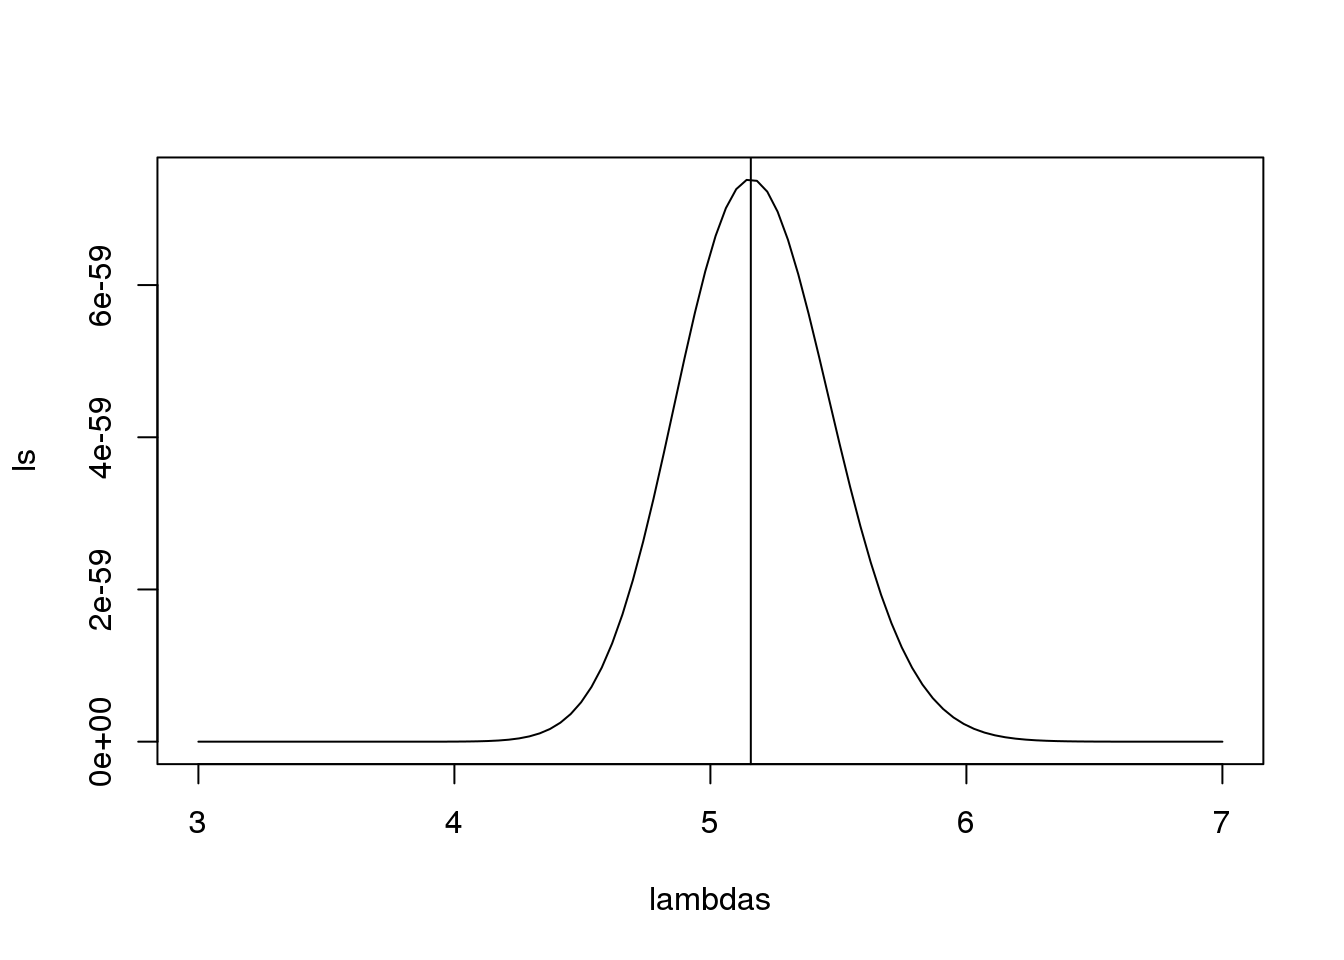 Likelihood versus lambda.